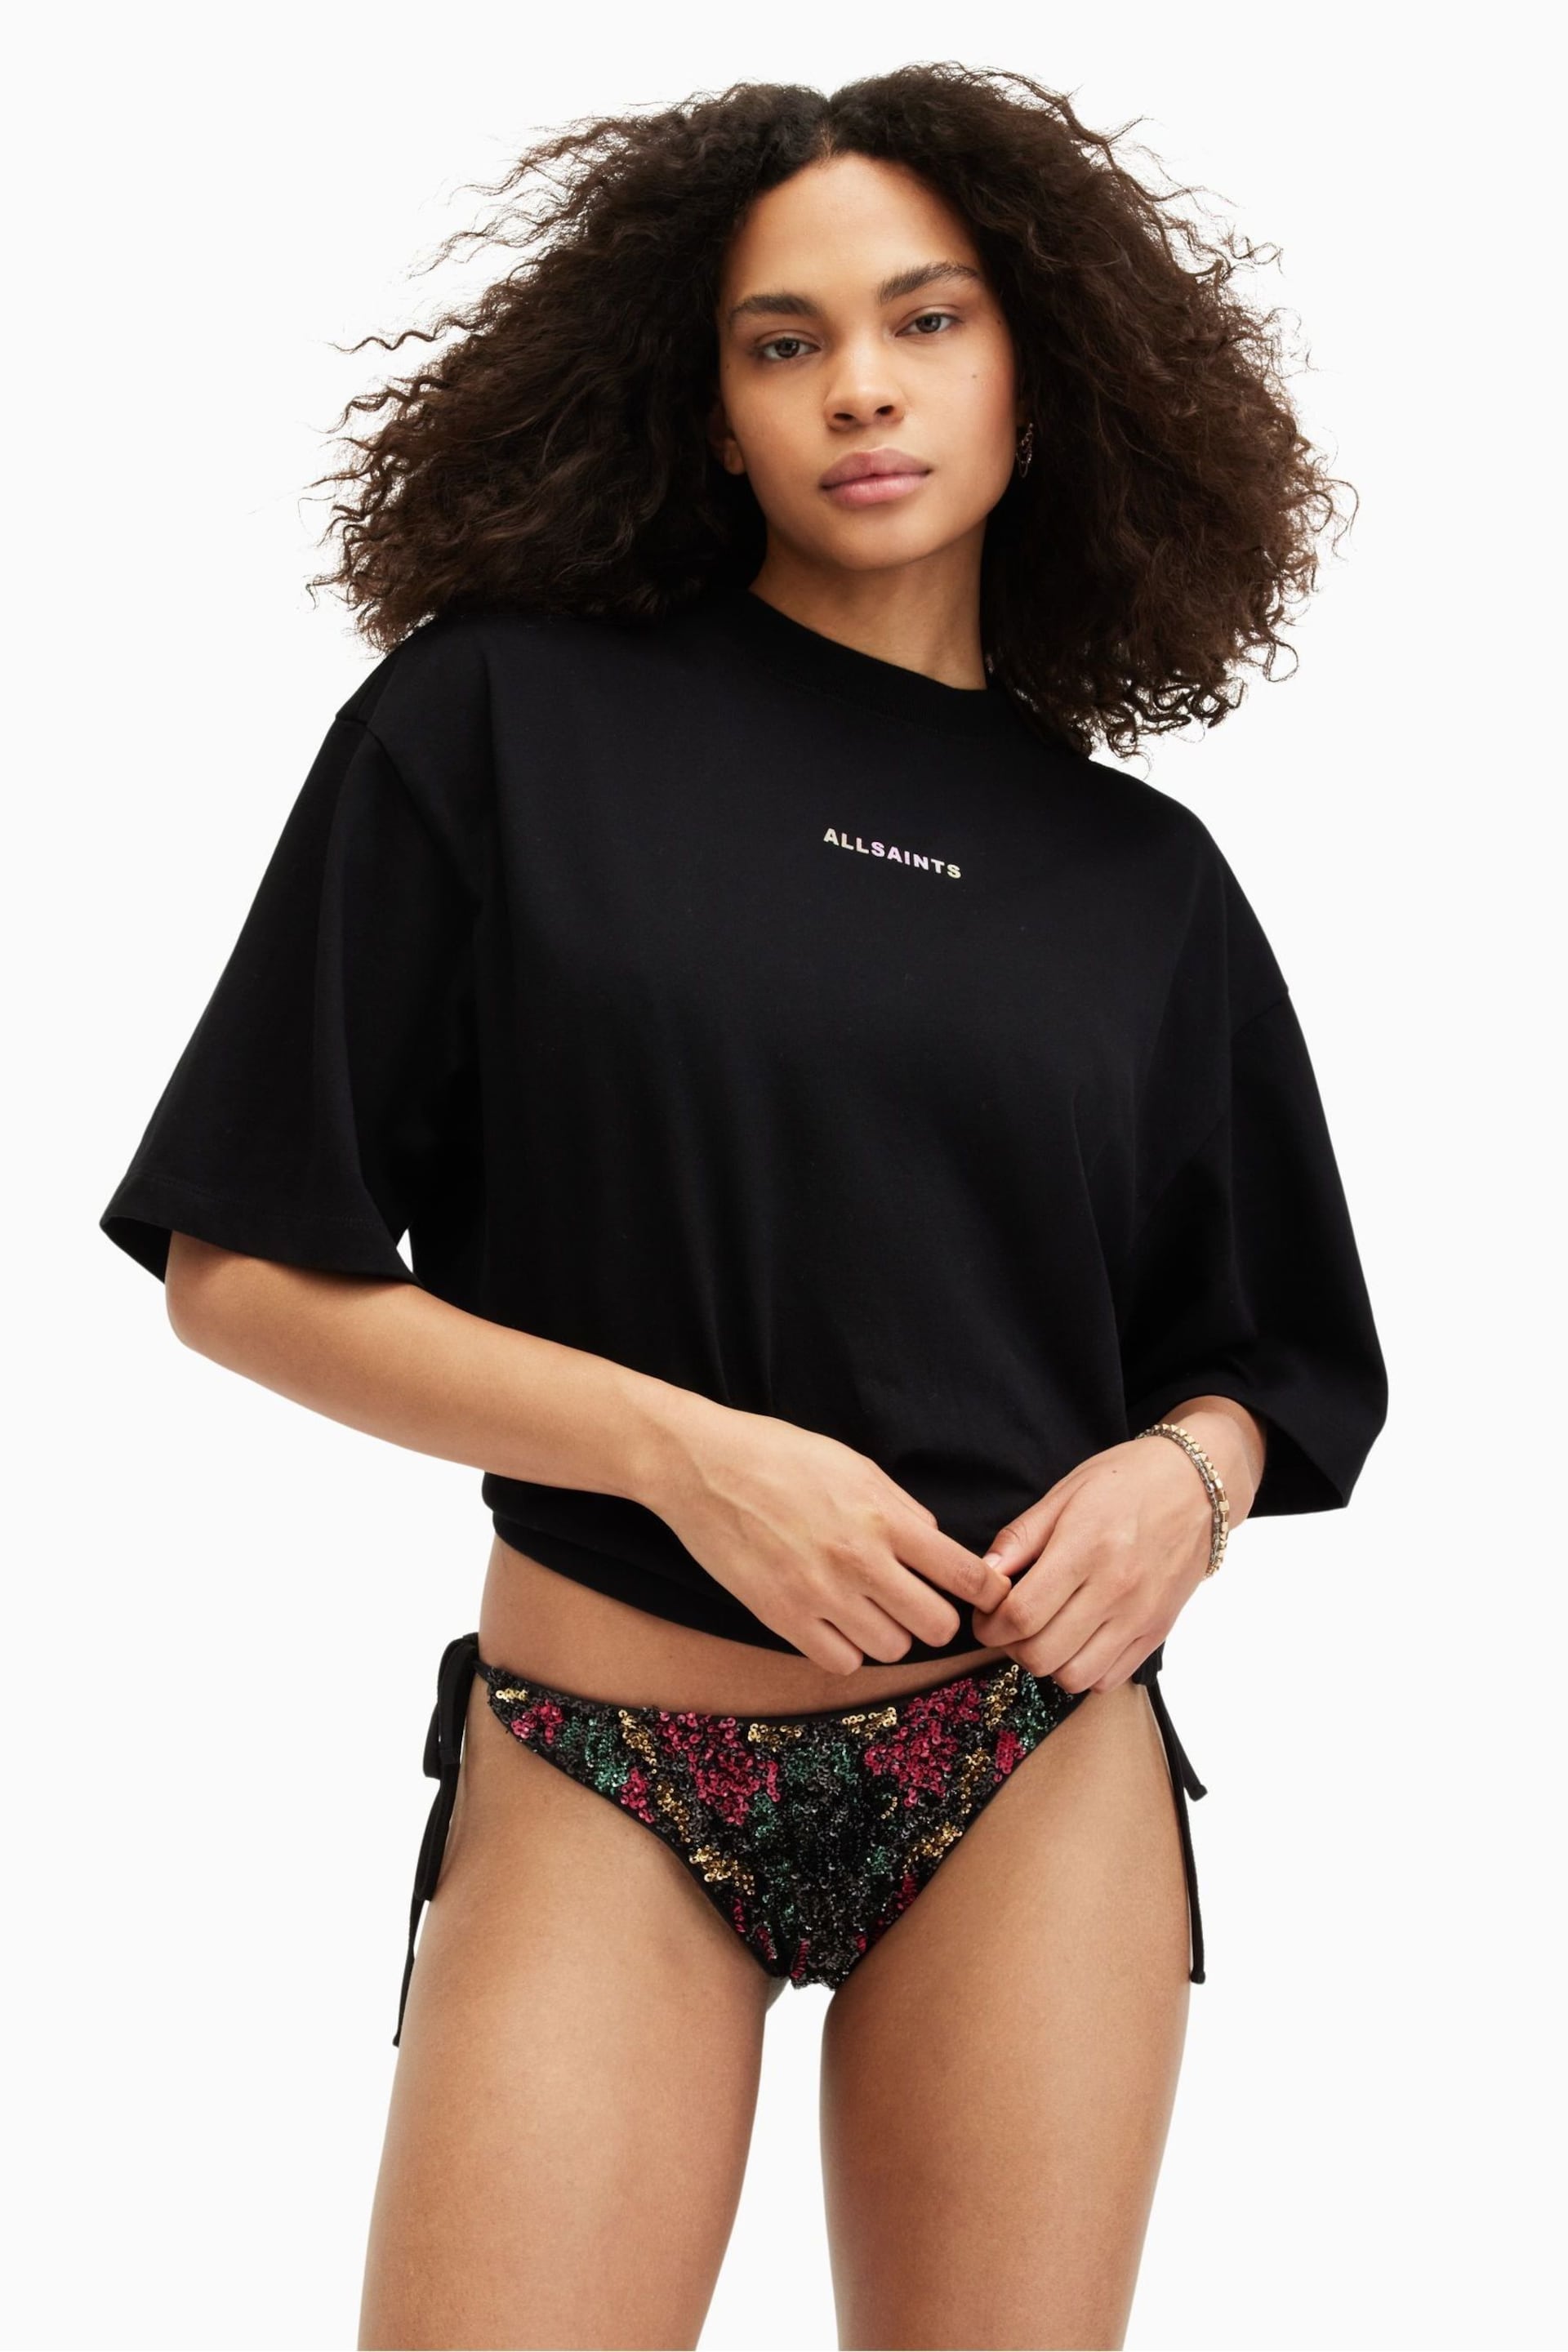 AllSaints Black Embroidered Jamilia Bikini Bottoms - Image 1 of 5